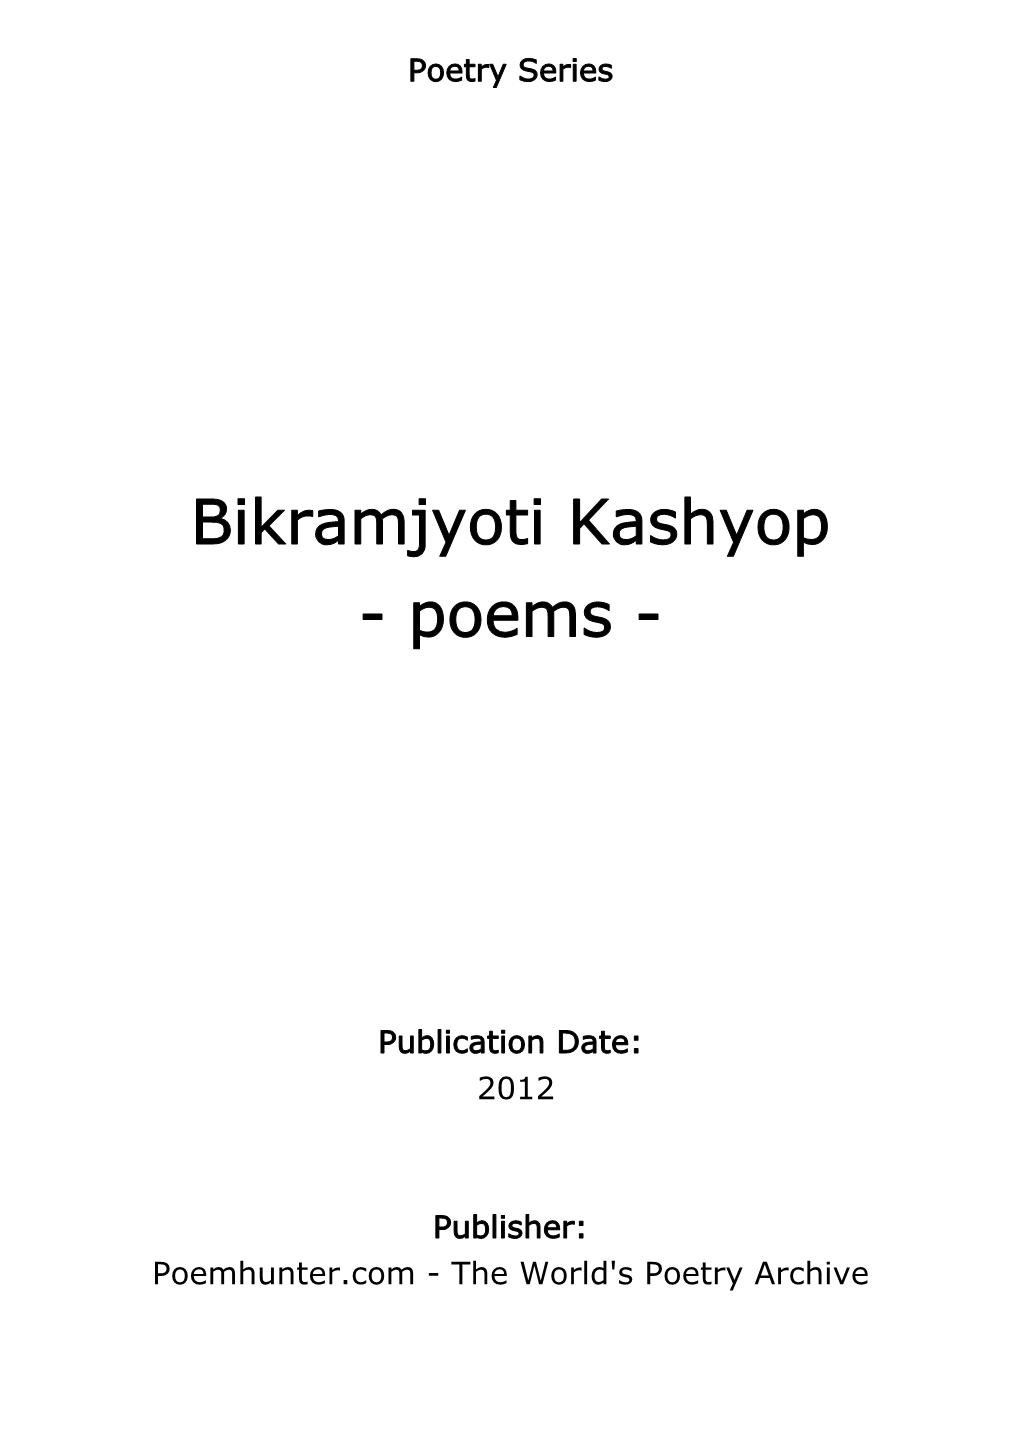 Bikramjyoti Kashyop - Poems